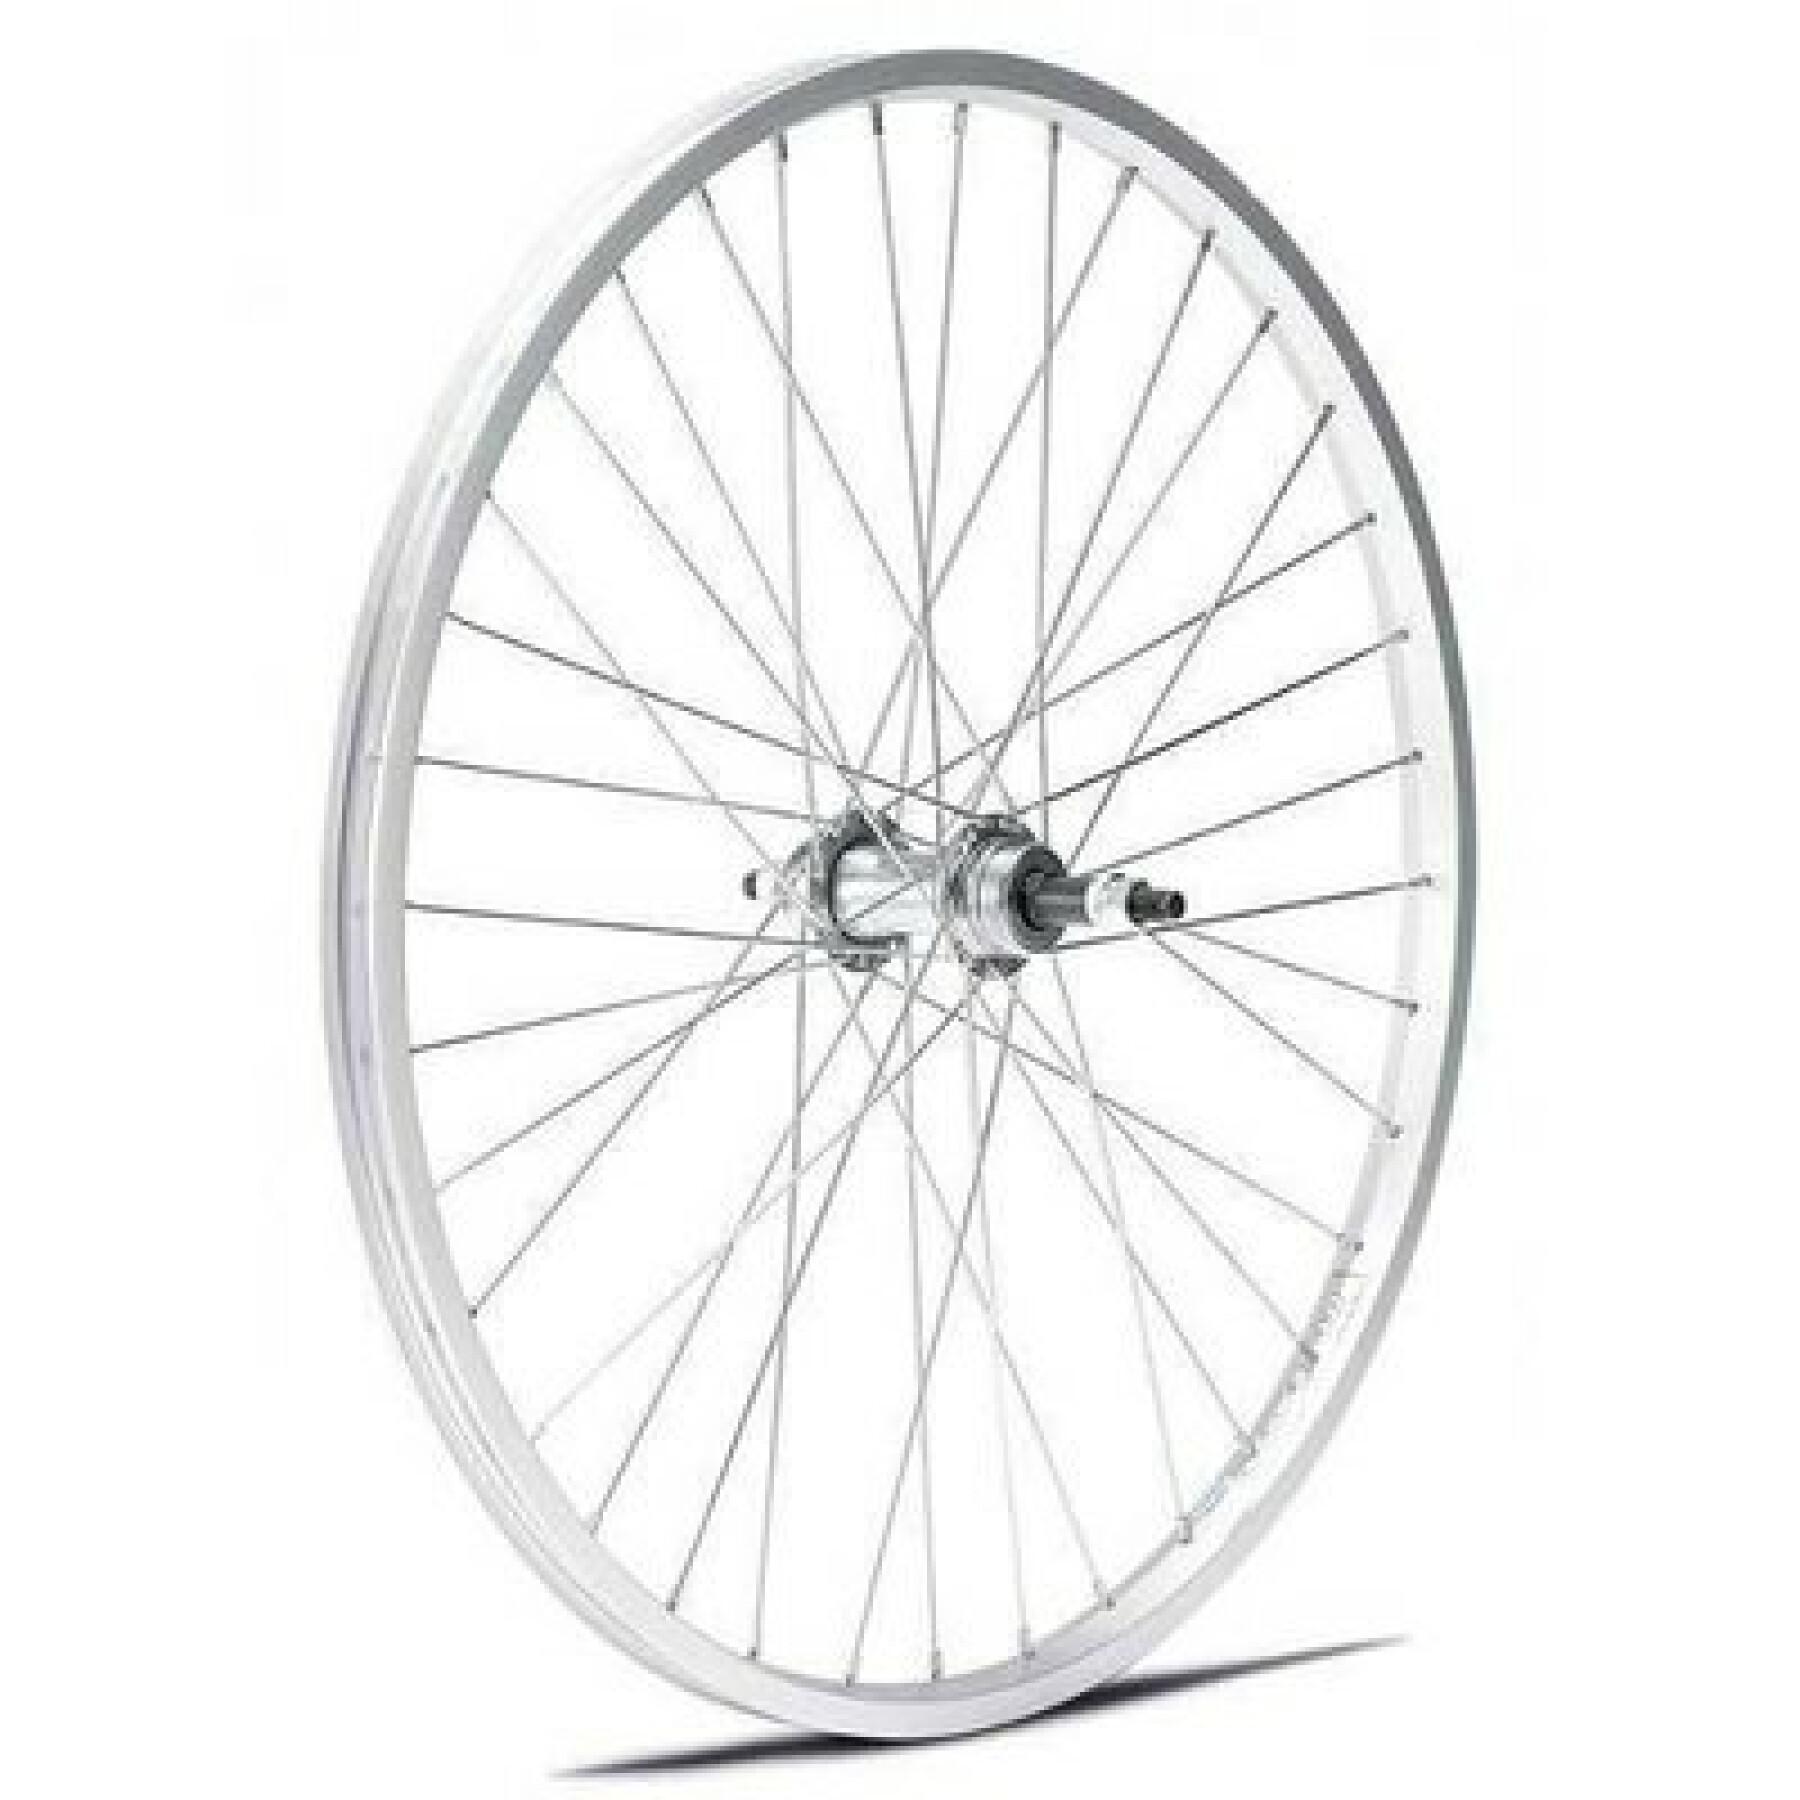 Rear mountain bike wheel with 350 aluminum spokes Gurpil